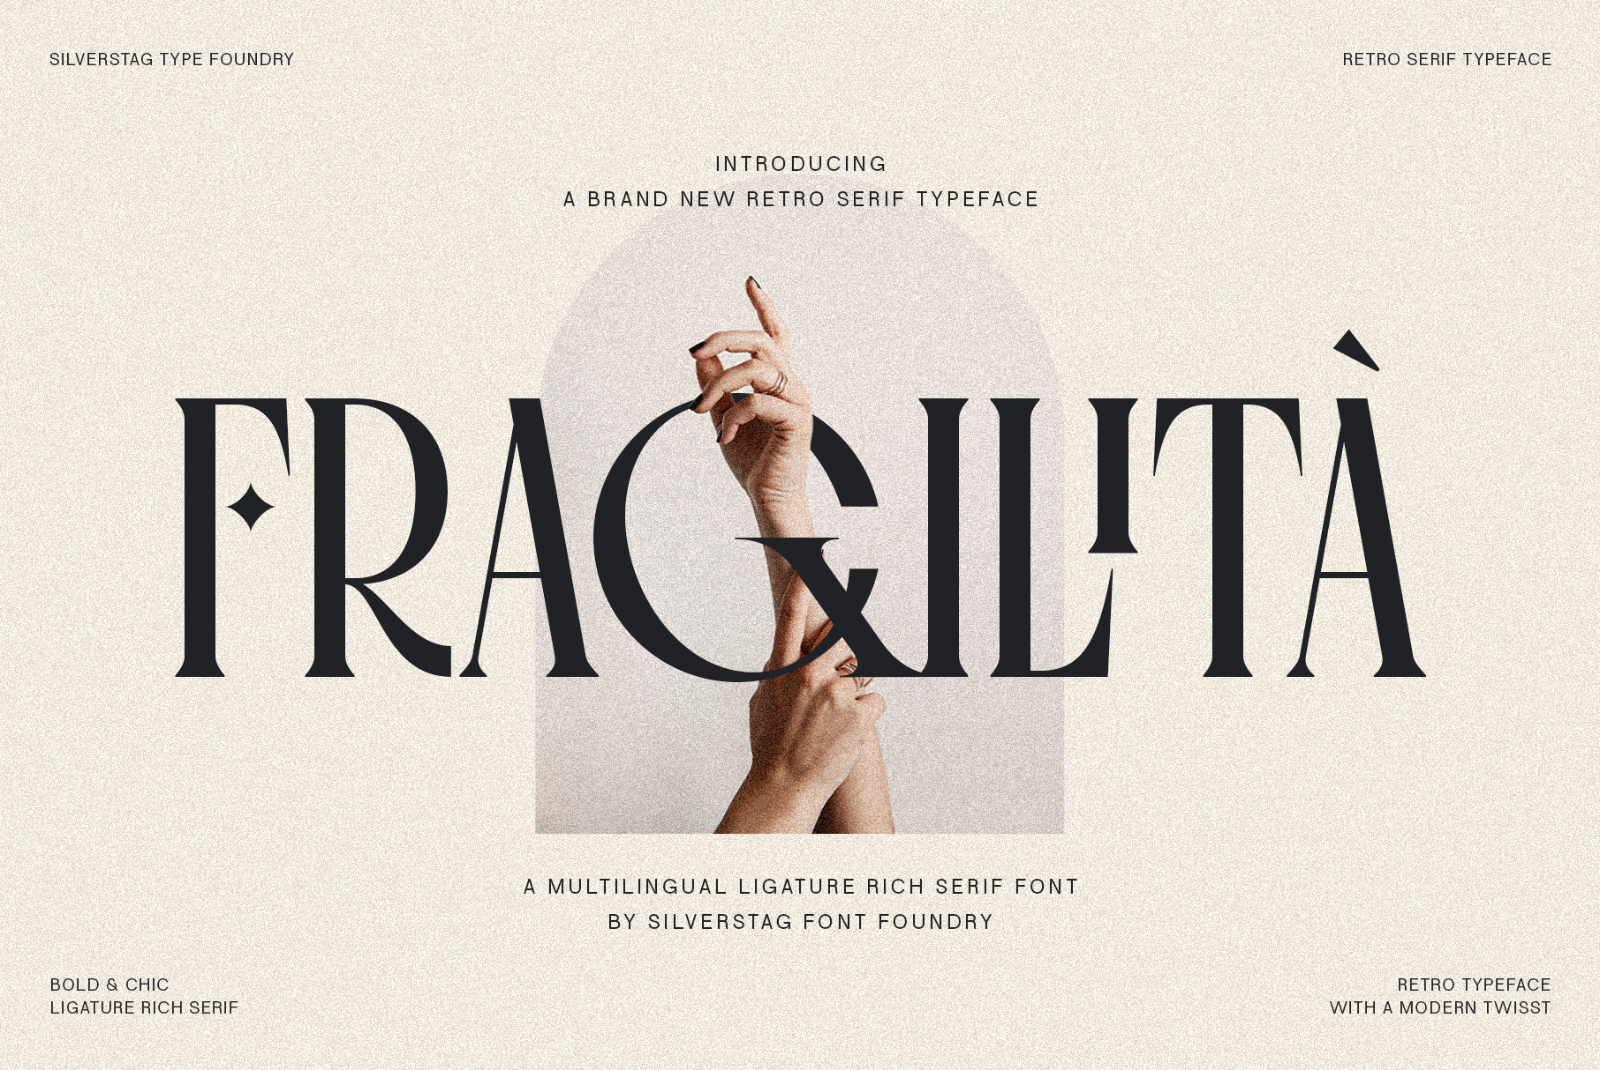 Retro Serif Typeface Fragilita Display, modern elegant font by Silverstag, ideal for branding, advertisements, multilingual ligature-rich design.